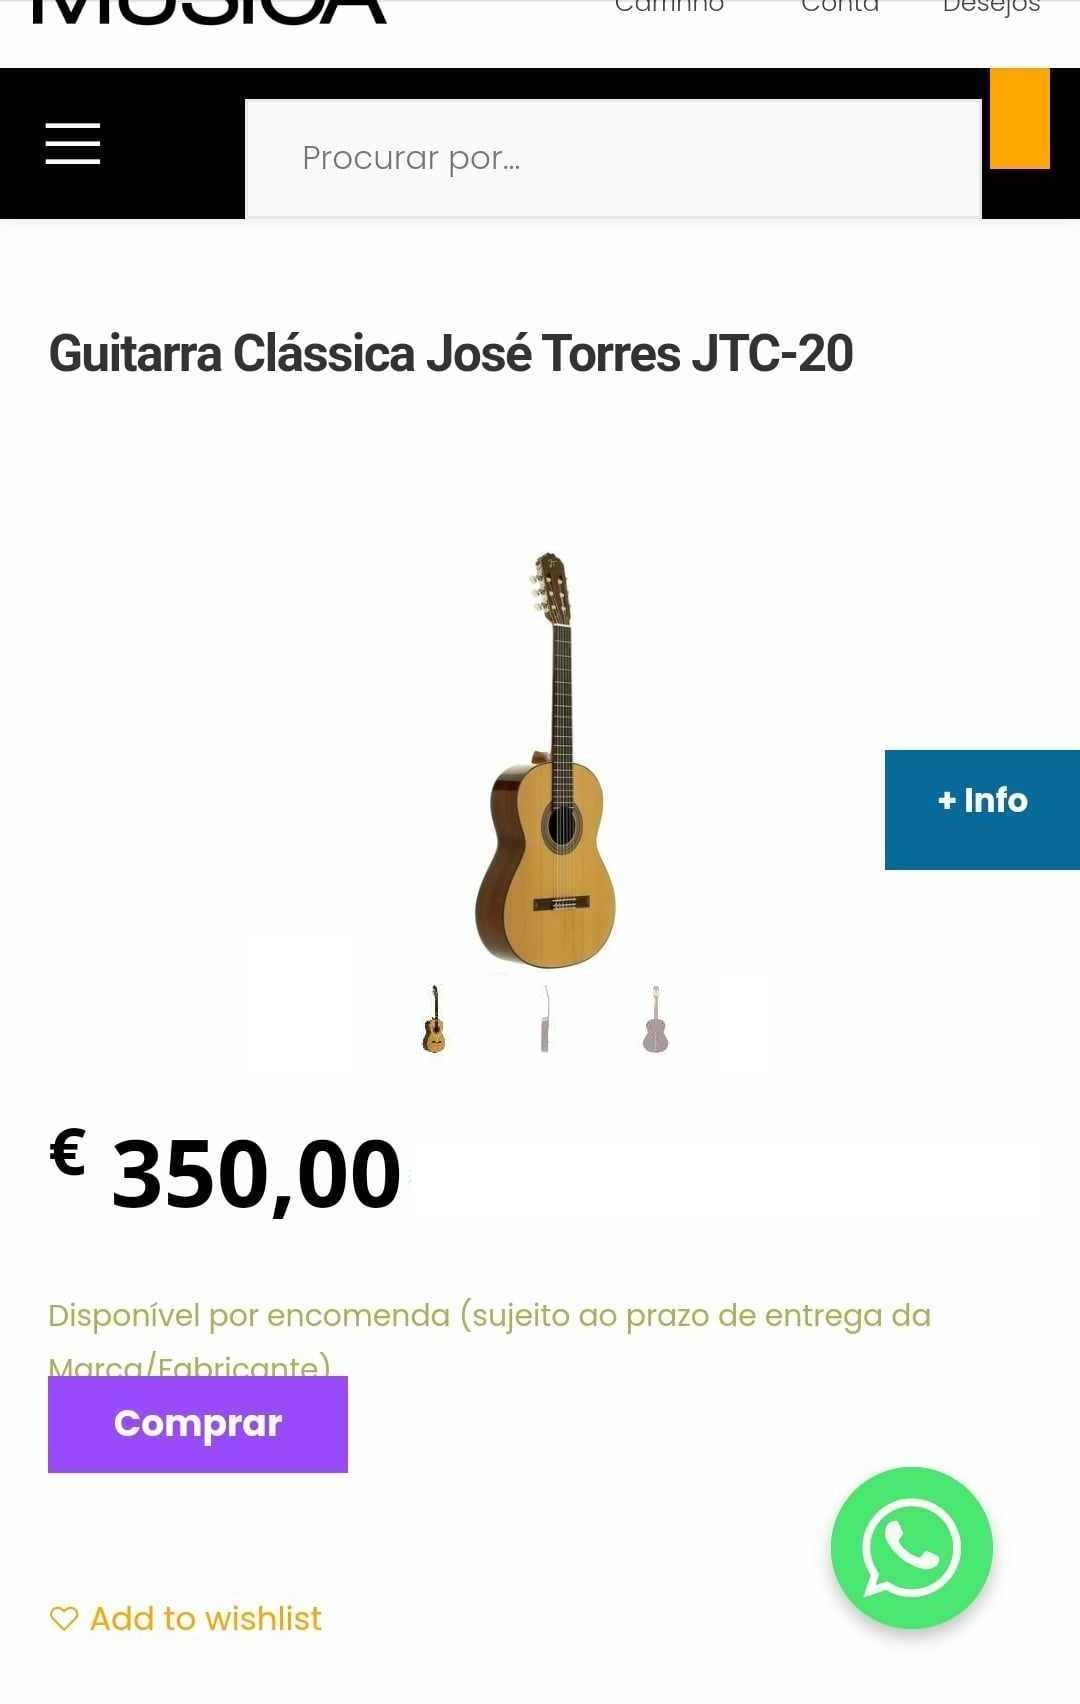 JOSÉ TORRES JTC-20 Guitarra Clássica violão